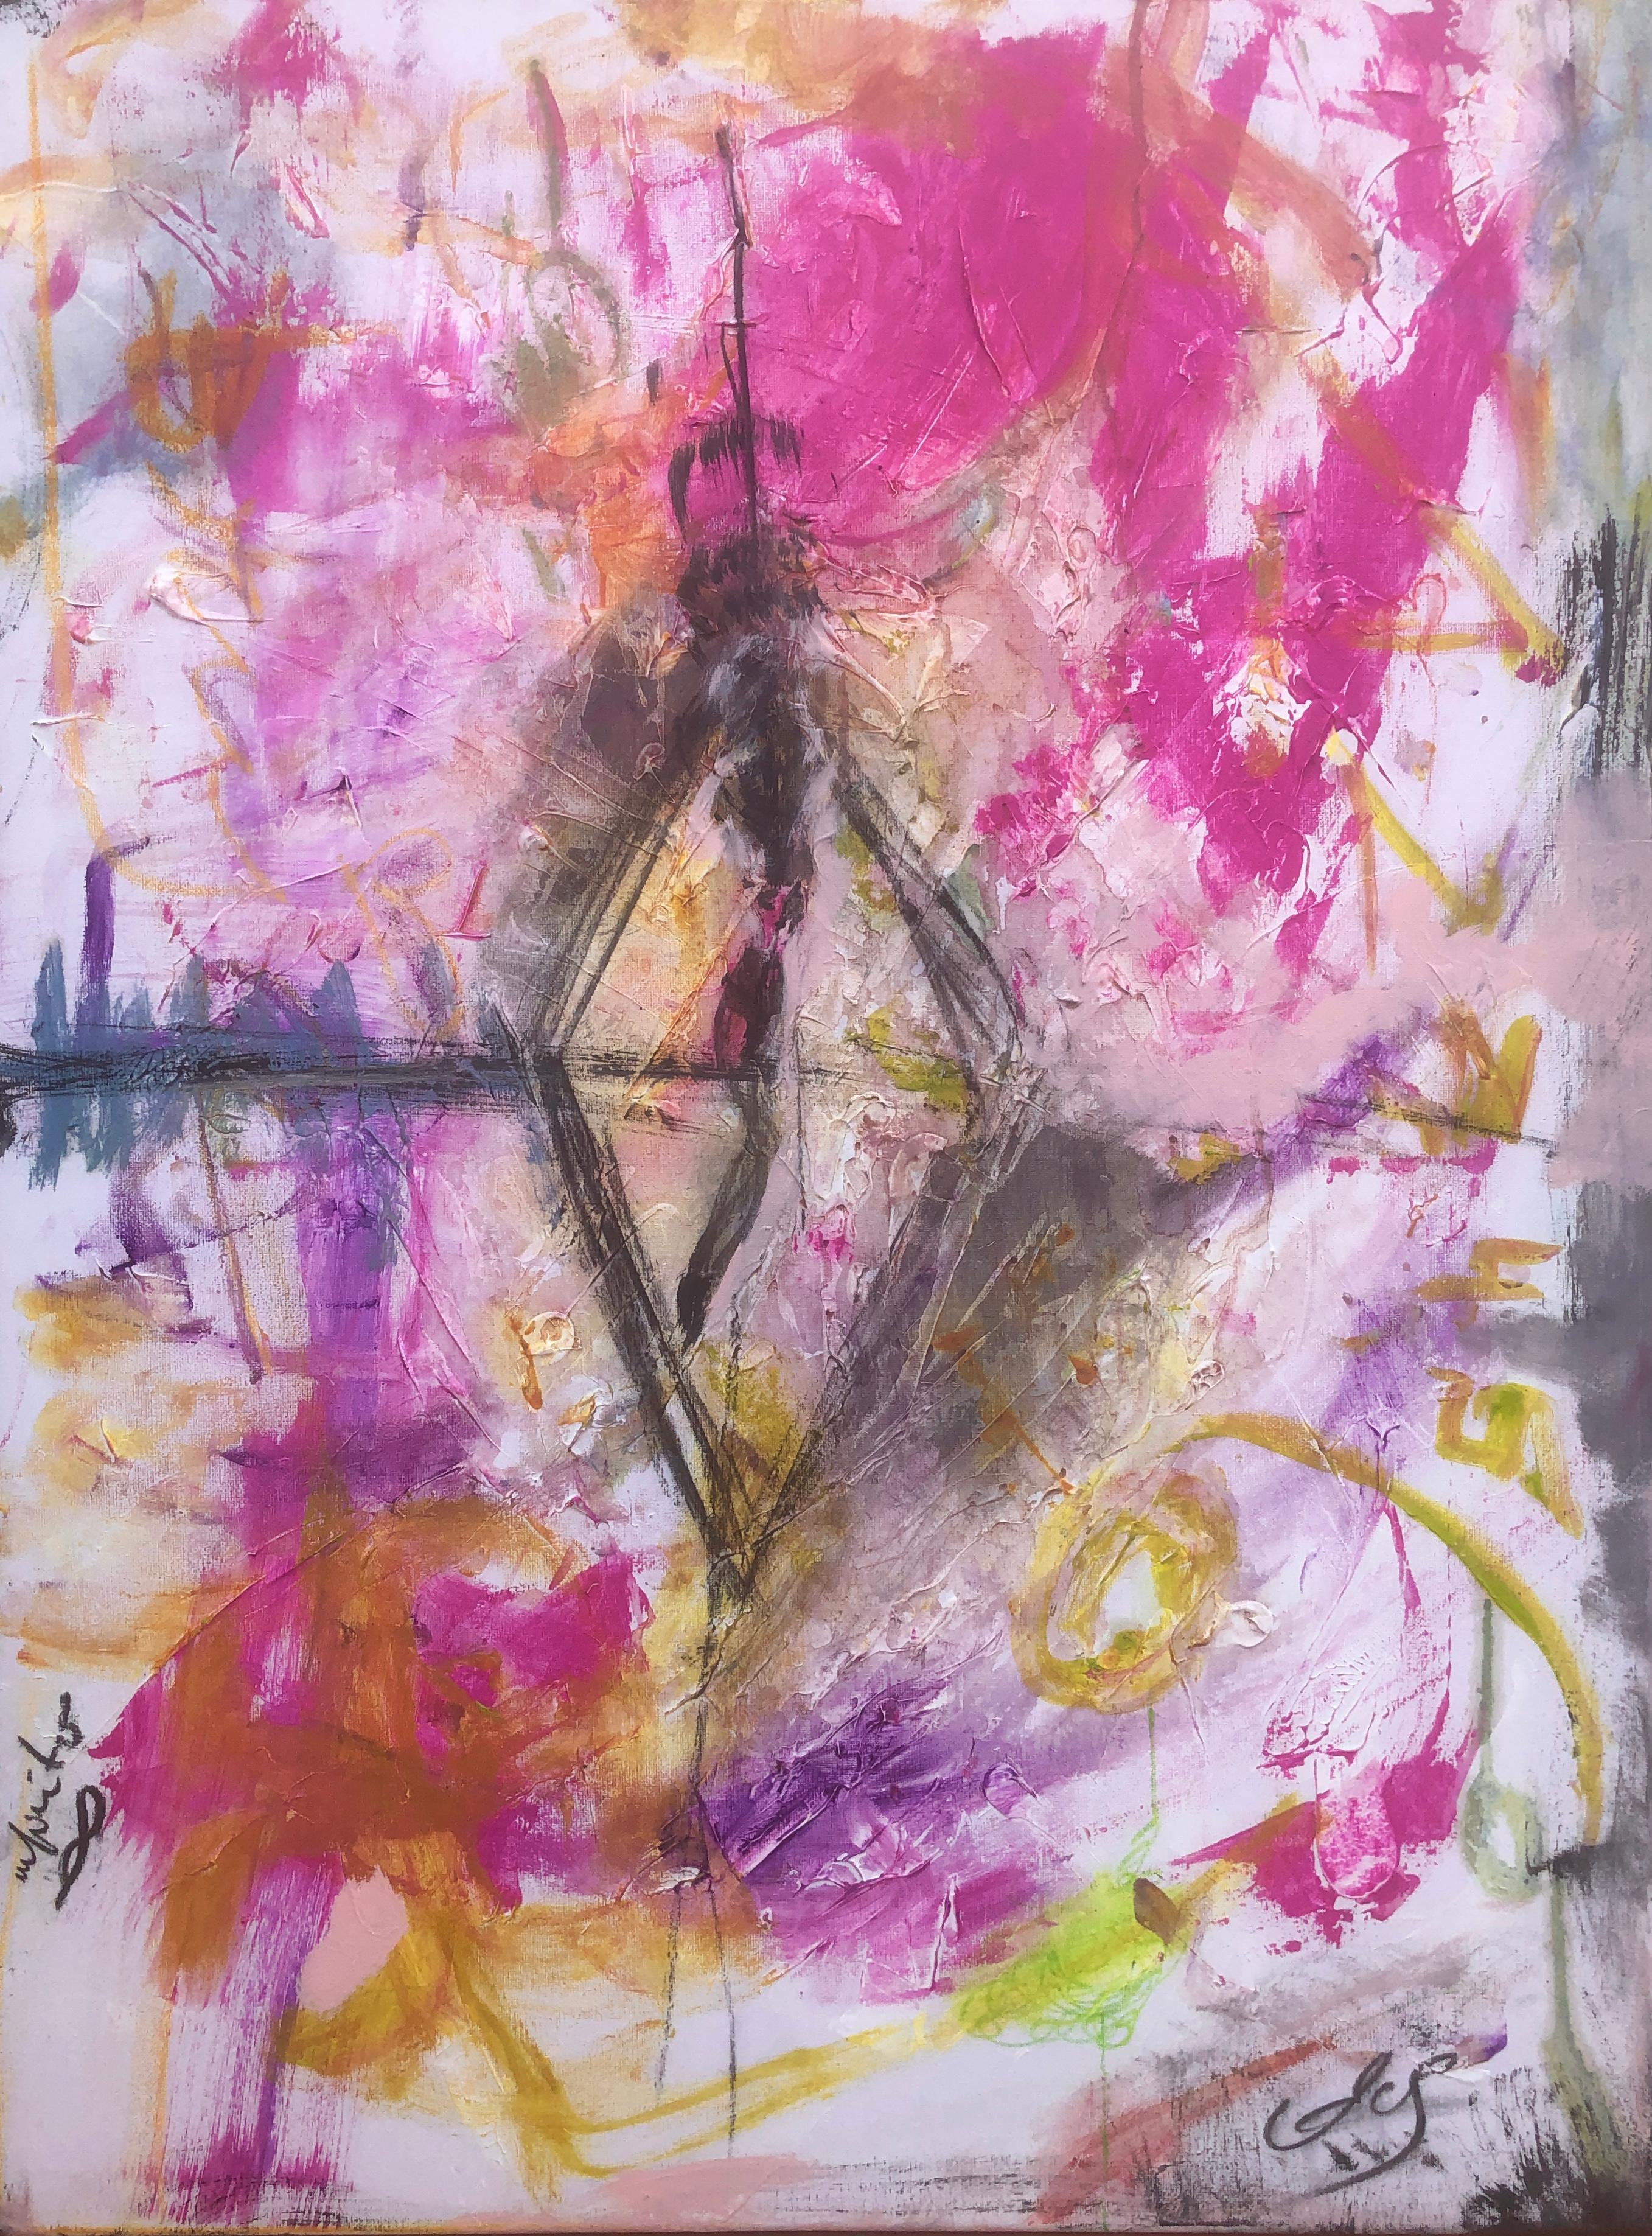 Nerea Caos Abstract Painting – Abstrakt-expressionistisches Gemälde in Öl auf Leinwand mit Farbexplosion